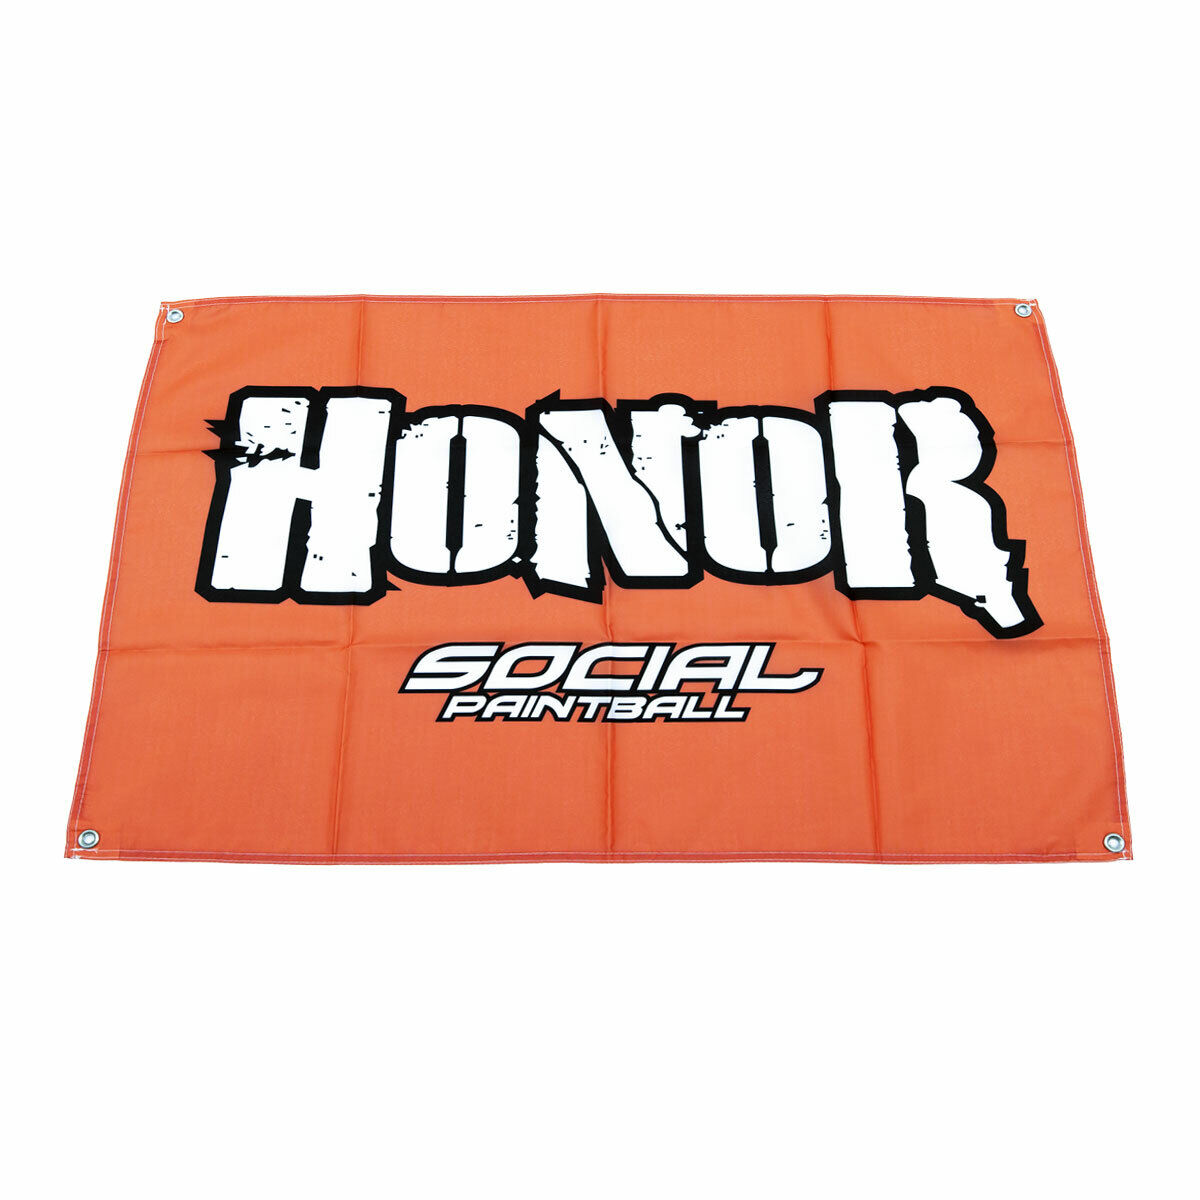 Social Paintball Dealer Banner - HONOR - 2' x 3' Red Black NEW free shipping